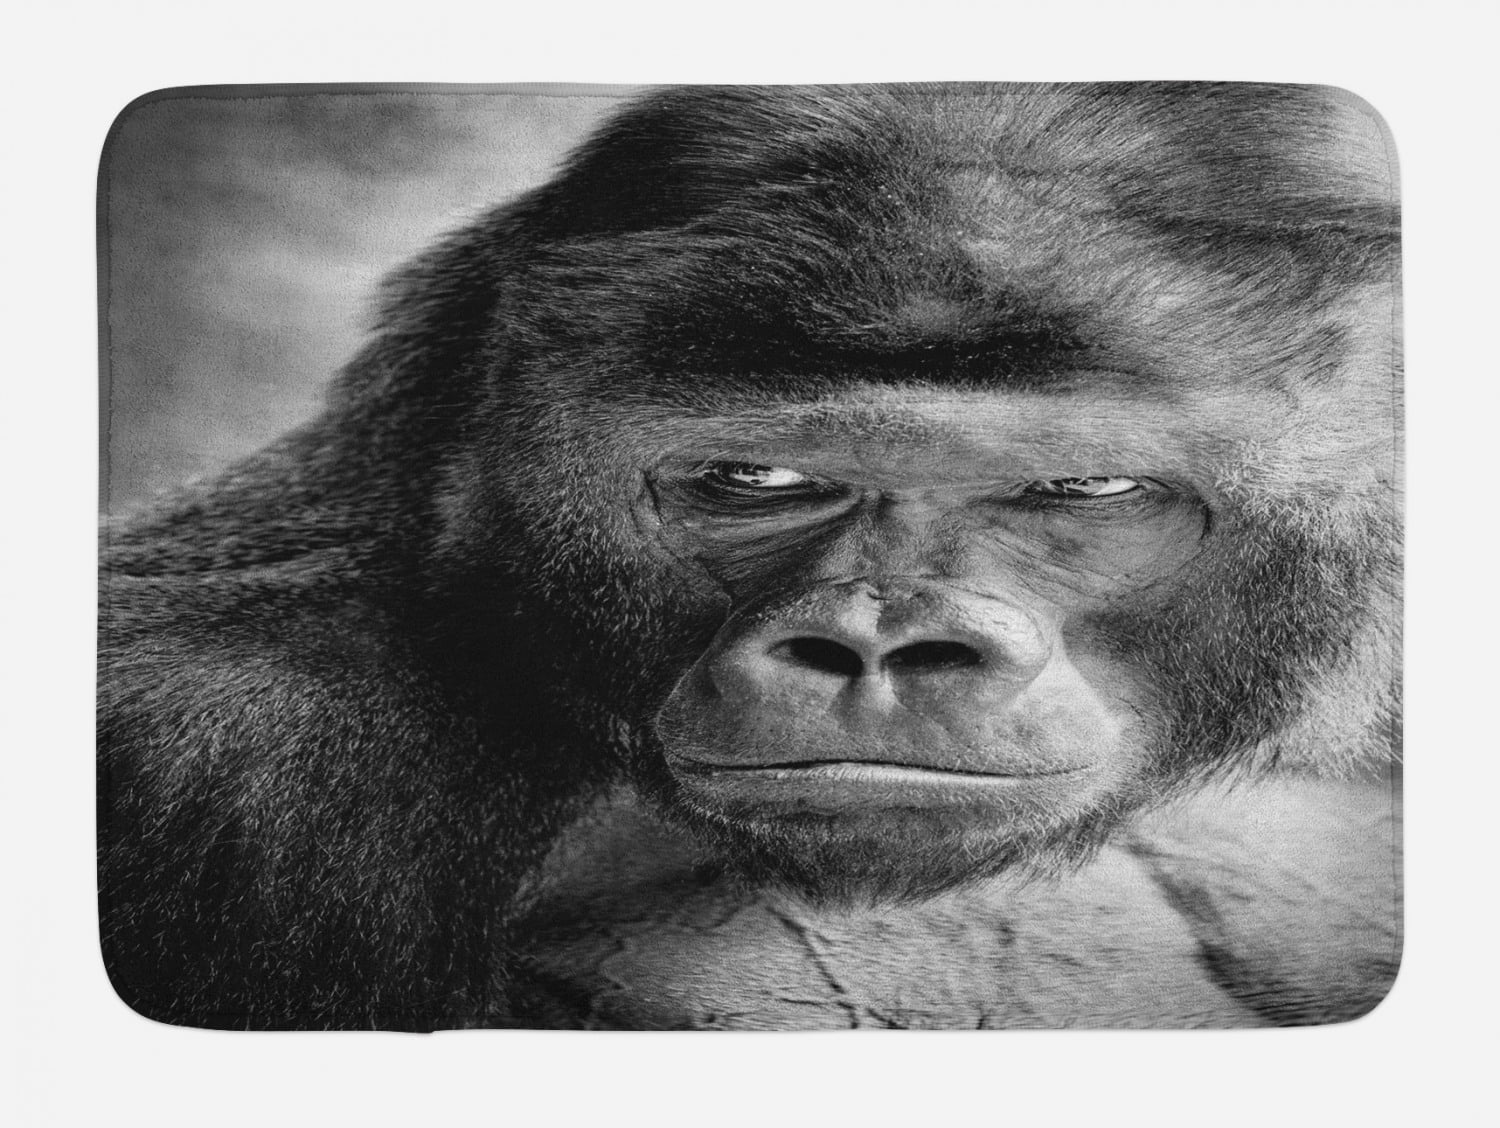 Gorilla Bath Mat, Close up Shot of an Ape Animal on a Blurry Background,  Plush Bathroom Decor Mat with Non Slip Backing, 29.5 X 17.5, Dimgray